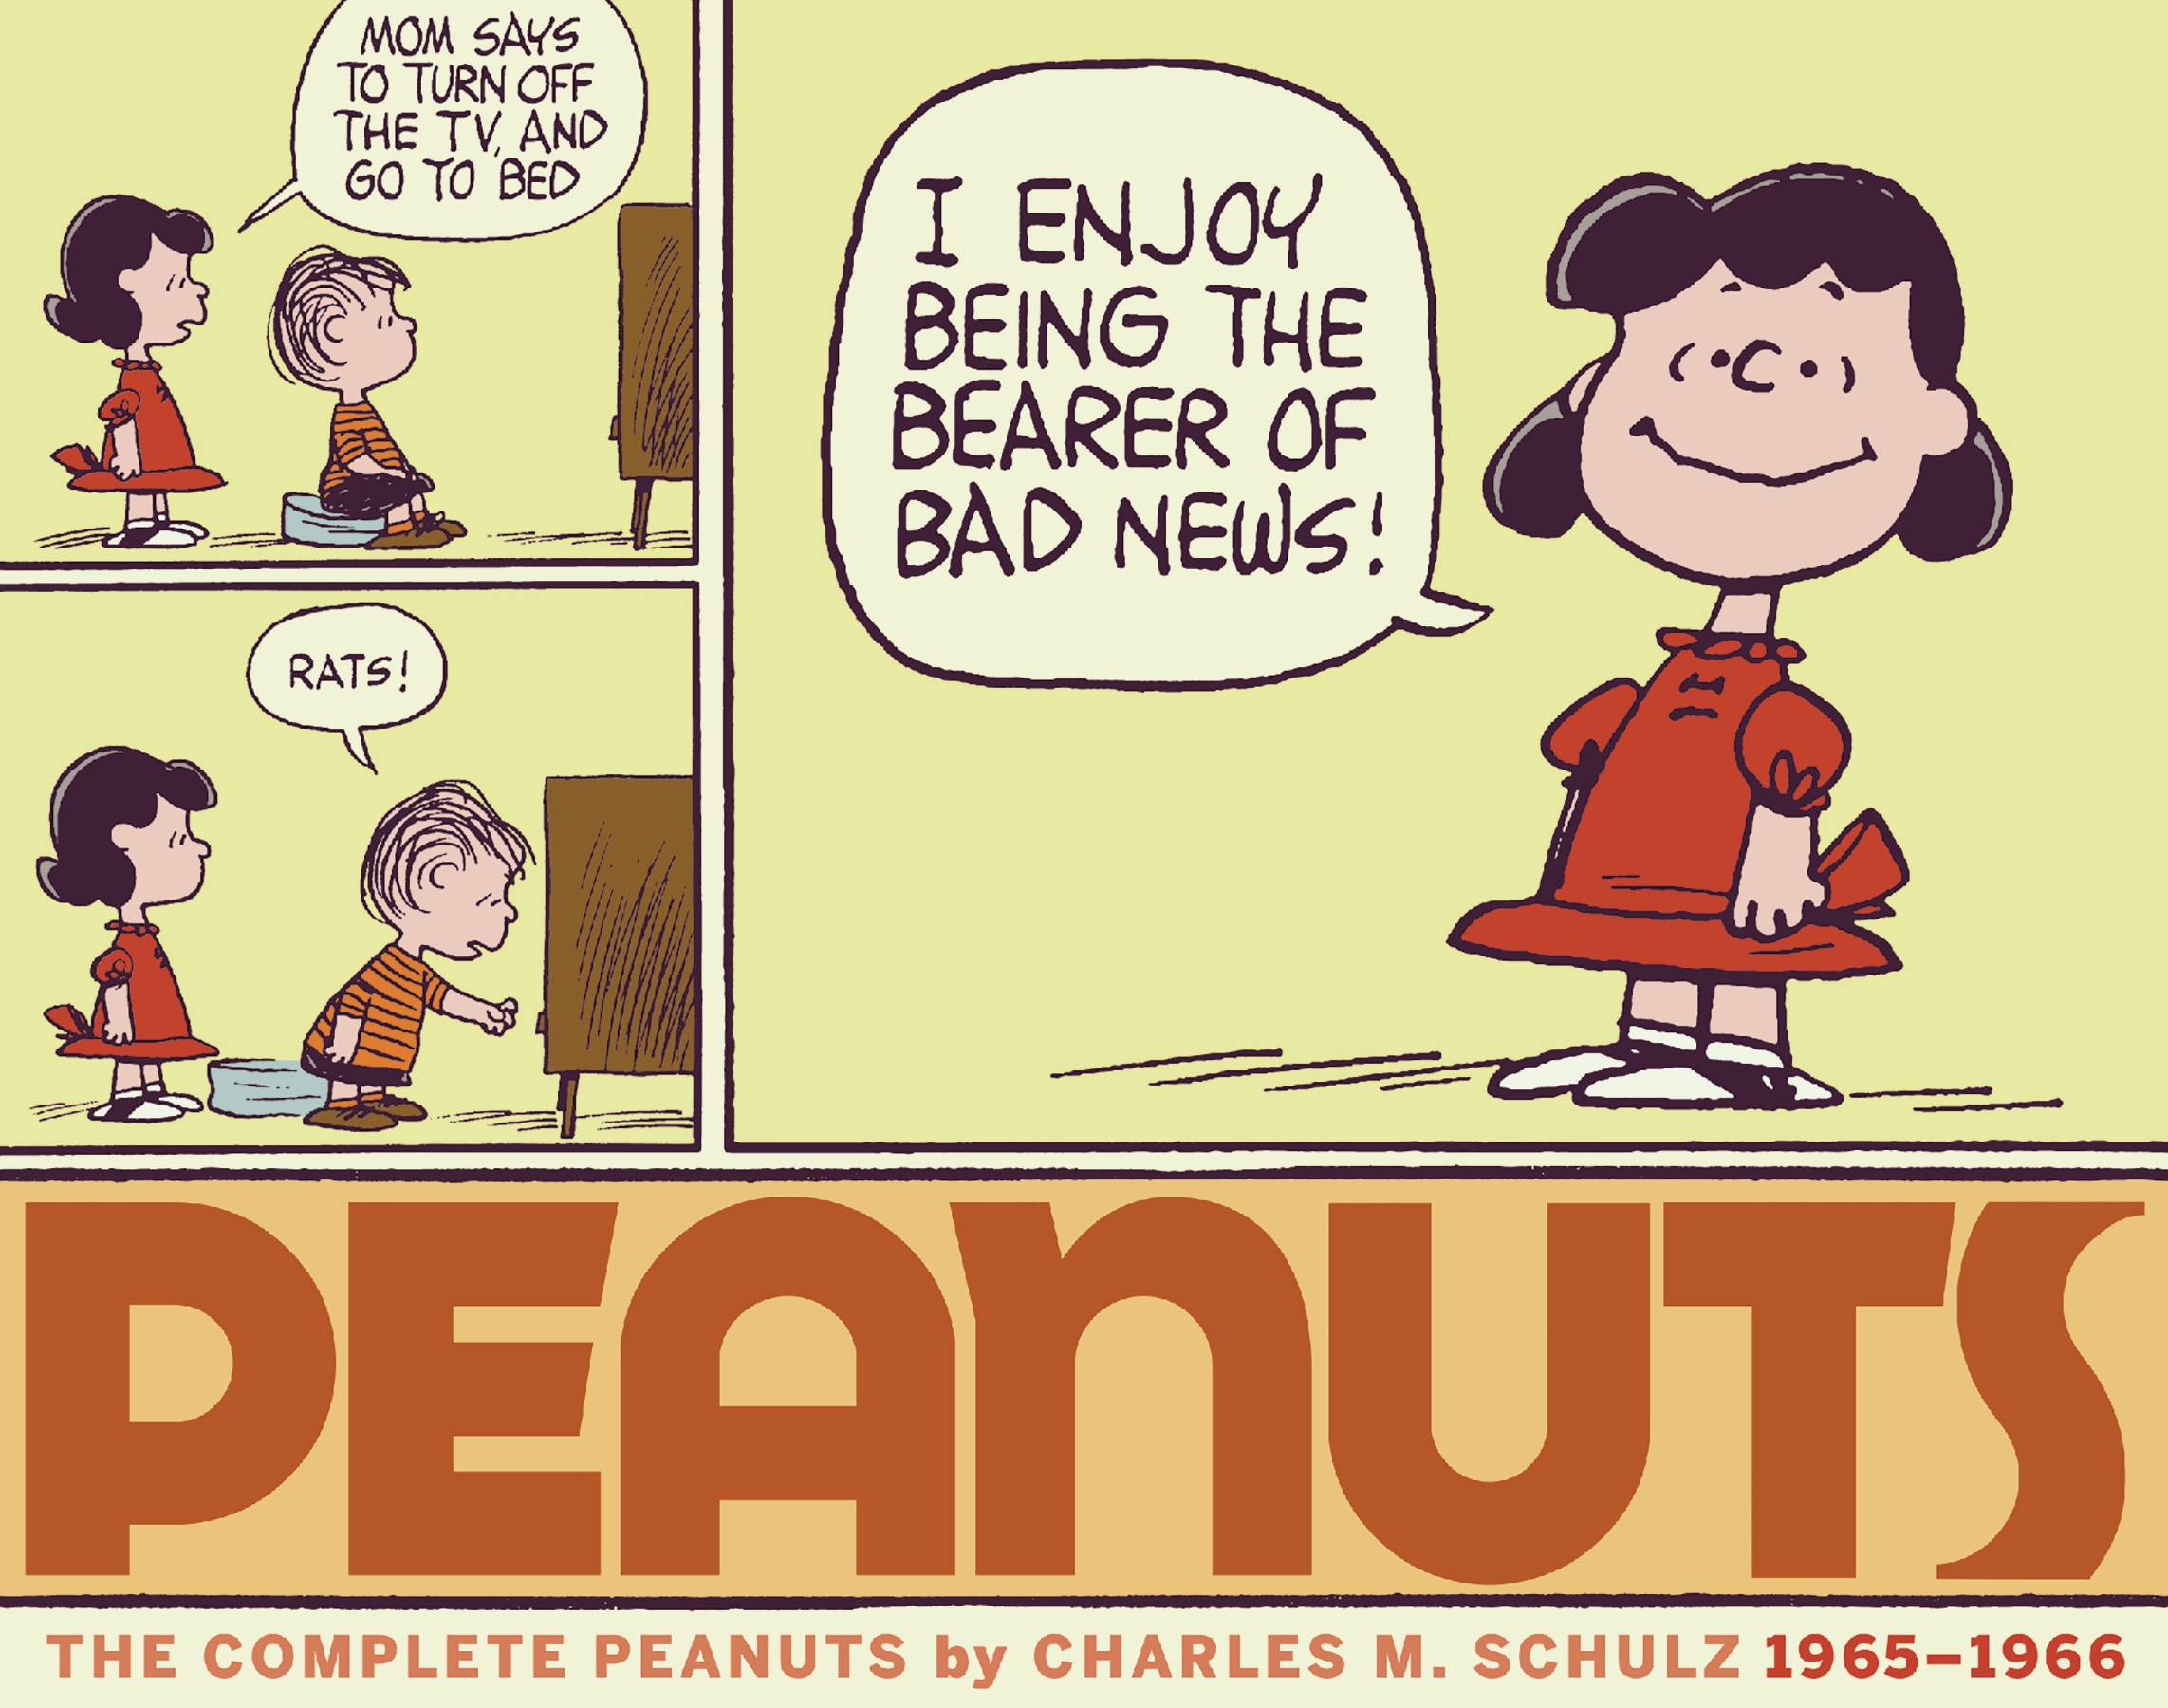 Complete Peanuts Graphic Novel Volume 8 1965-1966